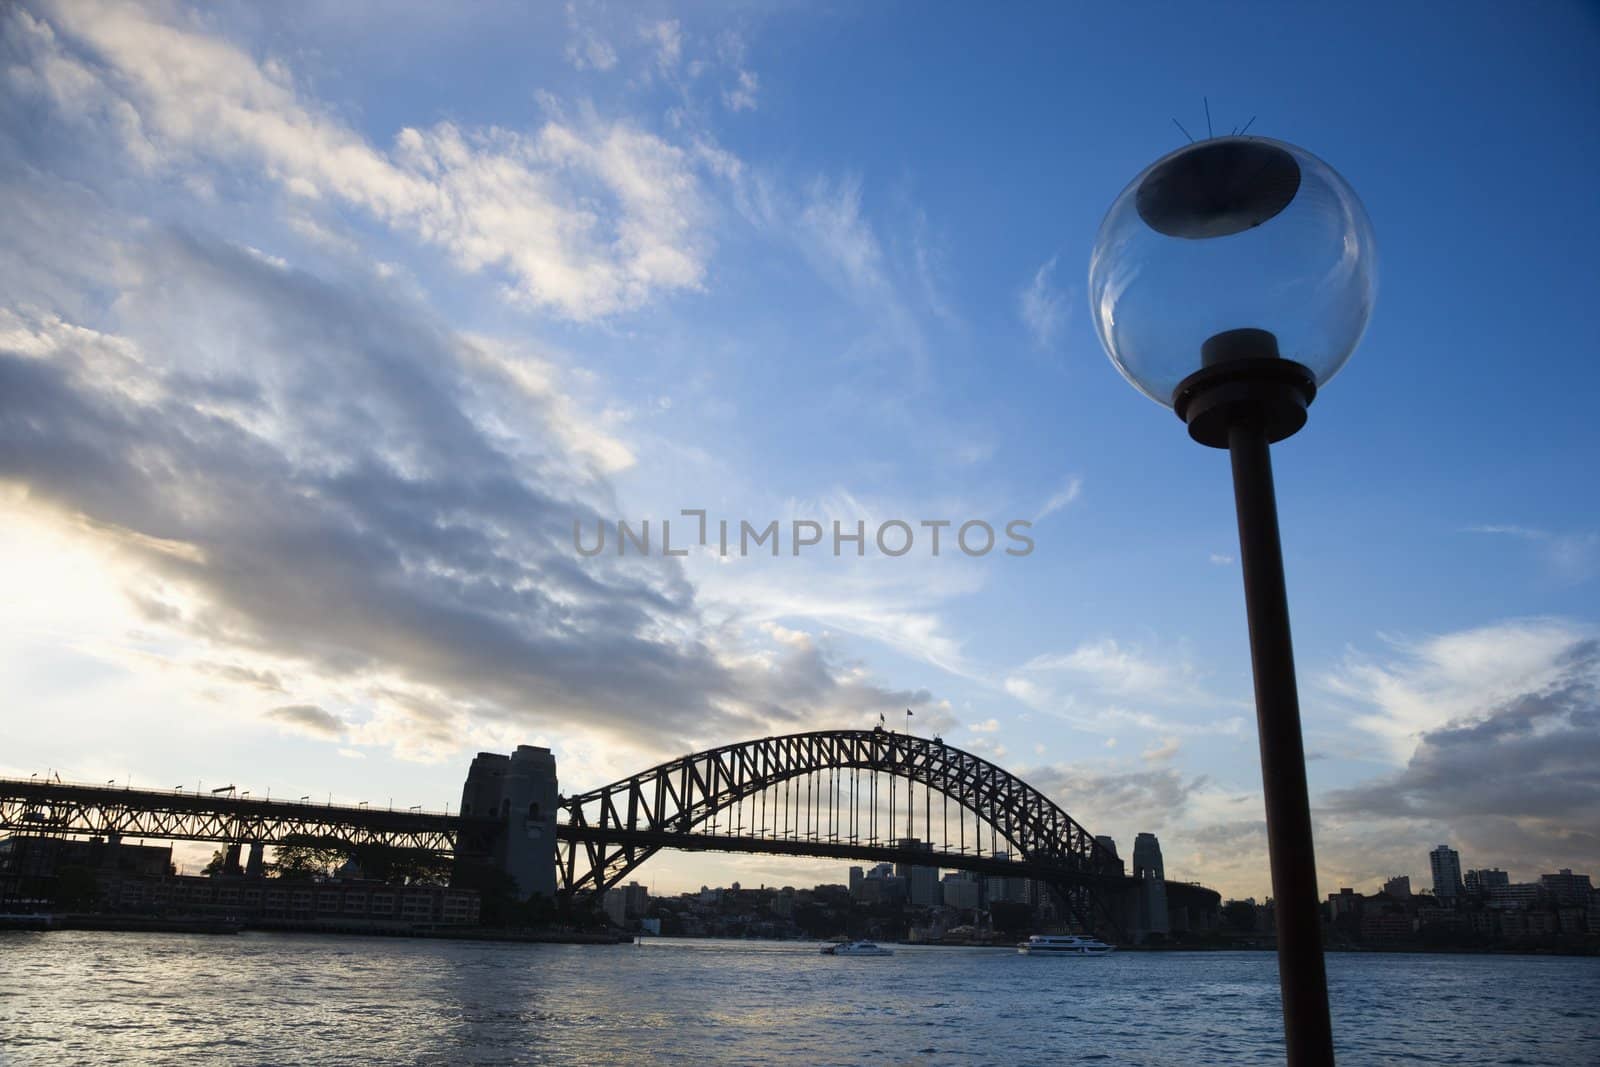 Sydney Harbour, Australia, with view of Sydney Harbour bridge and lamppost.